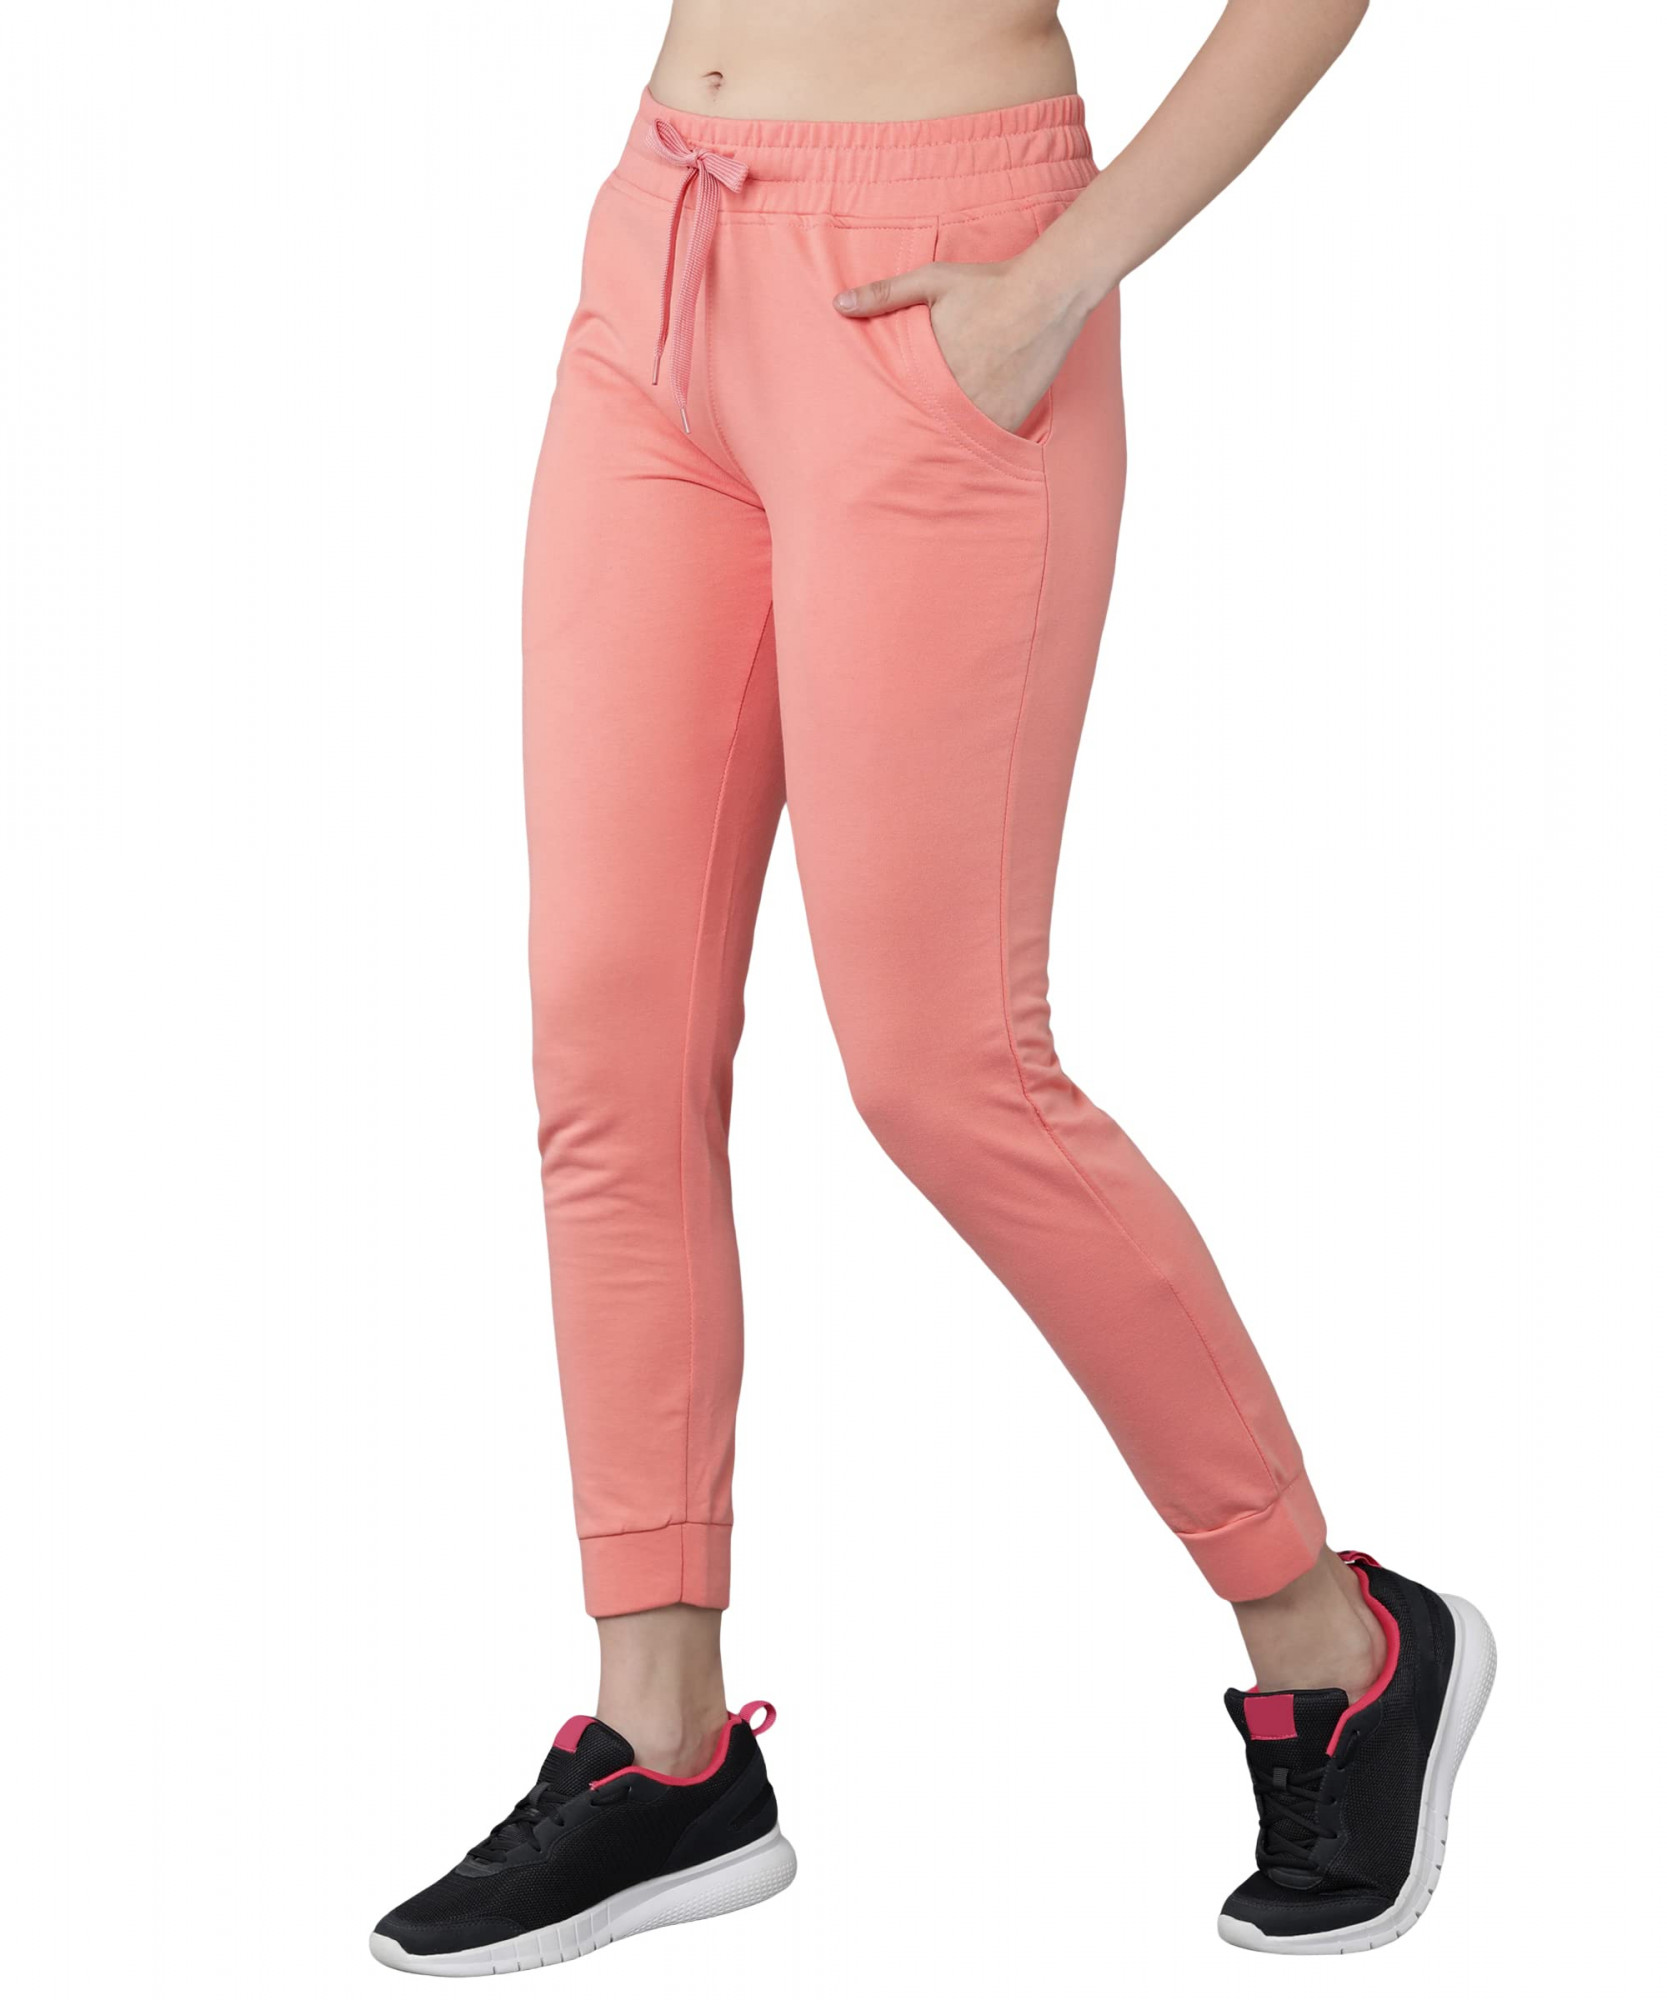 Alan Jones Clothing Women's Slim fit Joggers Track Pants  (WM19-JOG-BASIC_Pink_M),Size M